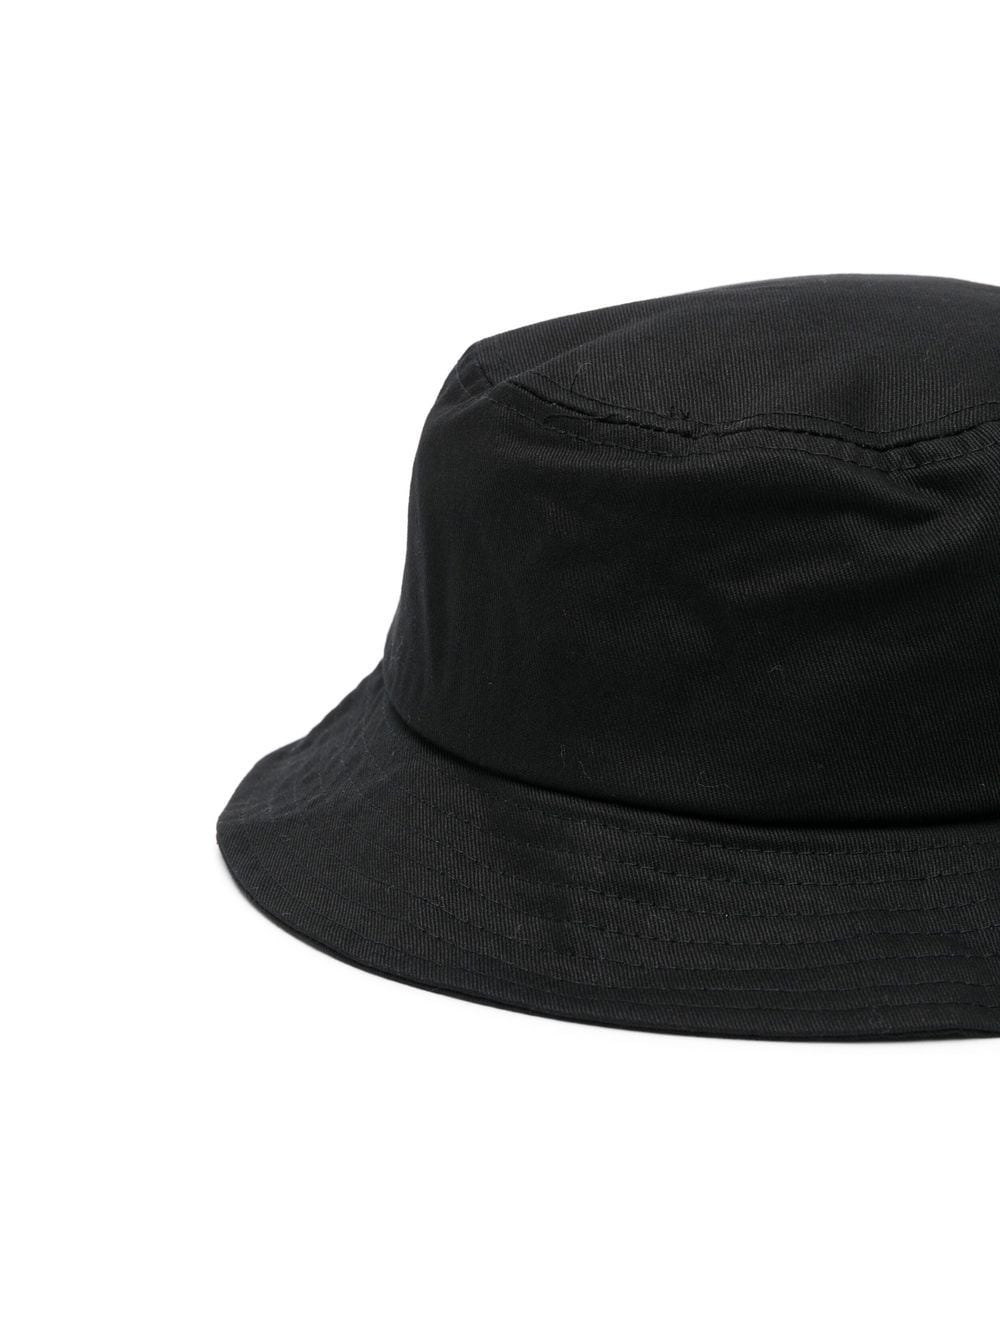 Kenzo Hats Black Hats Kenzo - LOLAMIR